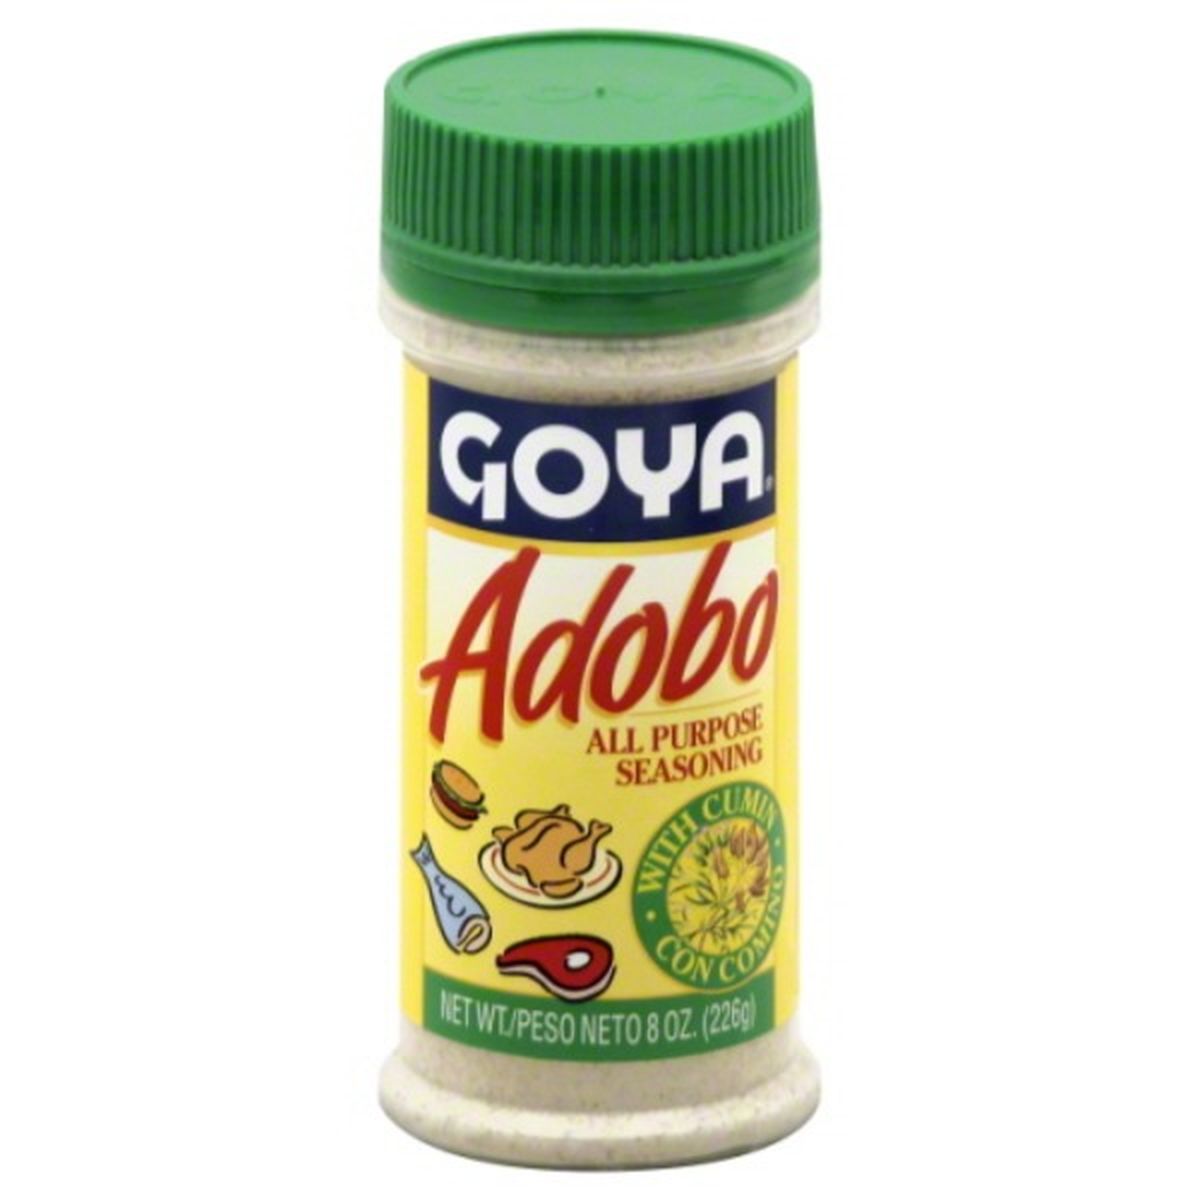 Calories in Goya Adobo Seasoning, All Purpose, with Cumin